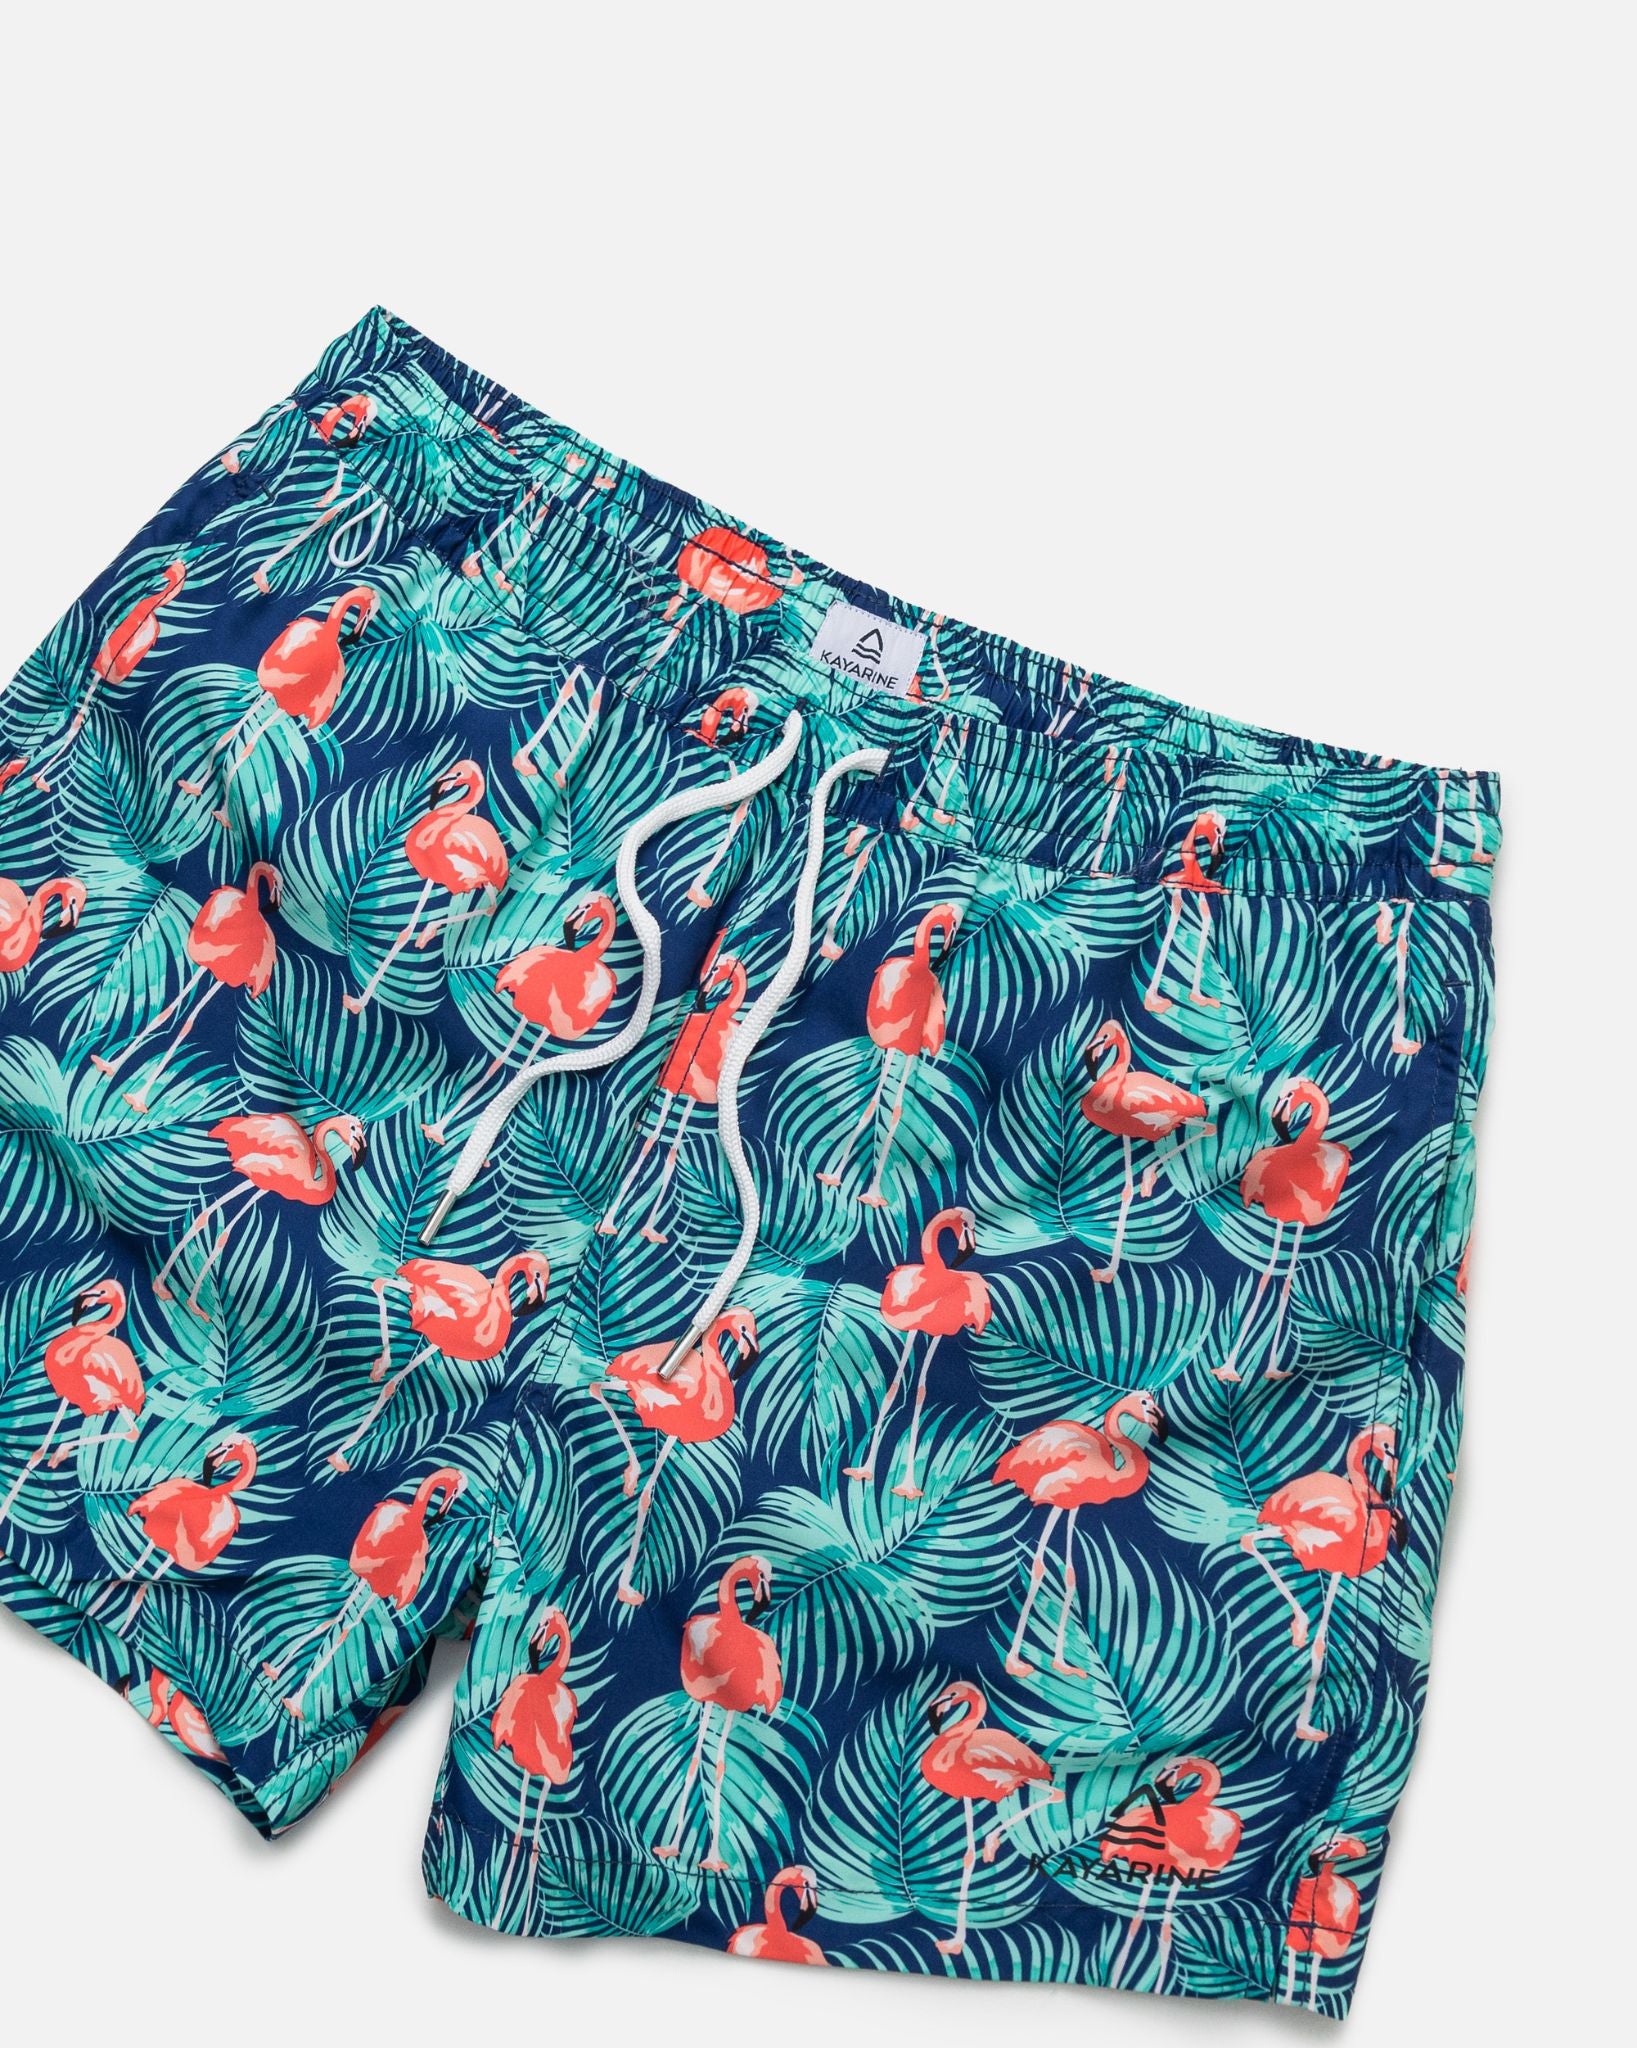 Men's Quick Dry Flamingo Board Shorts